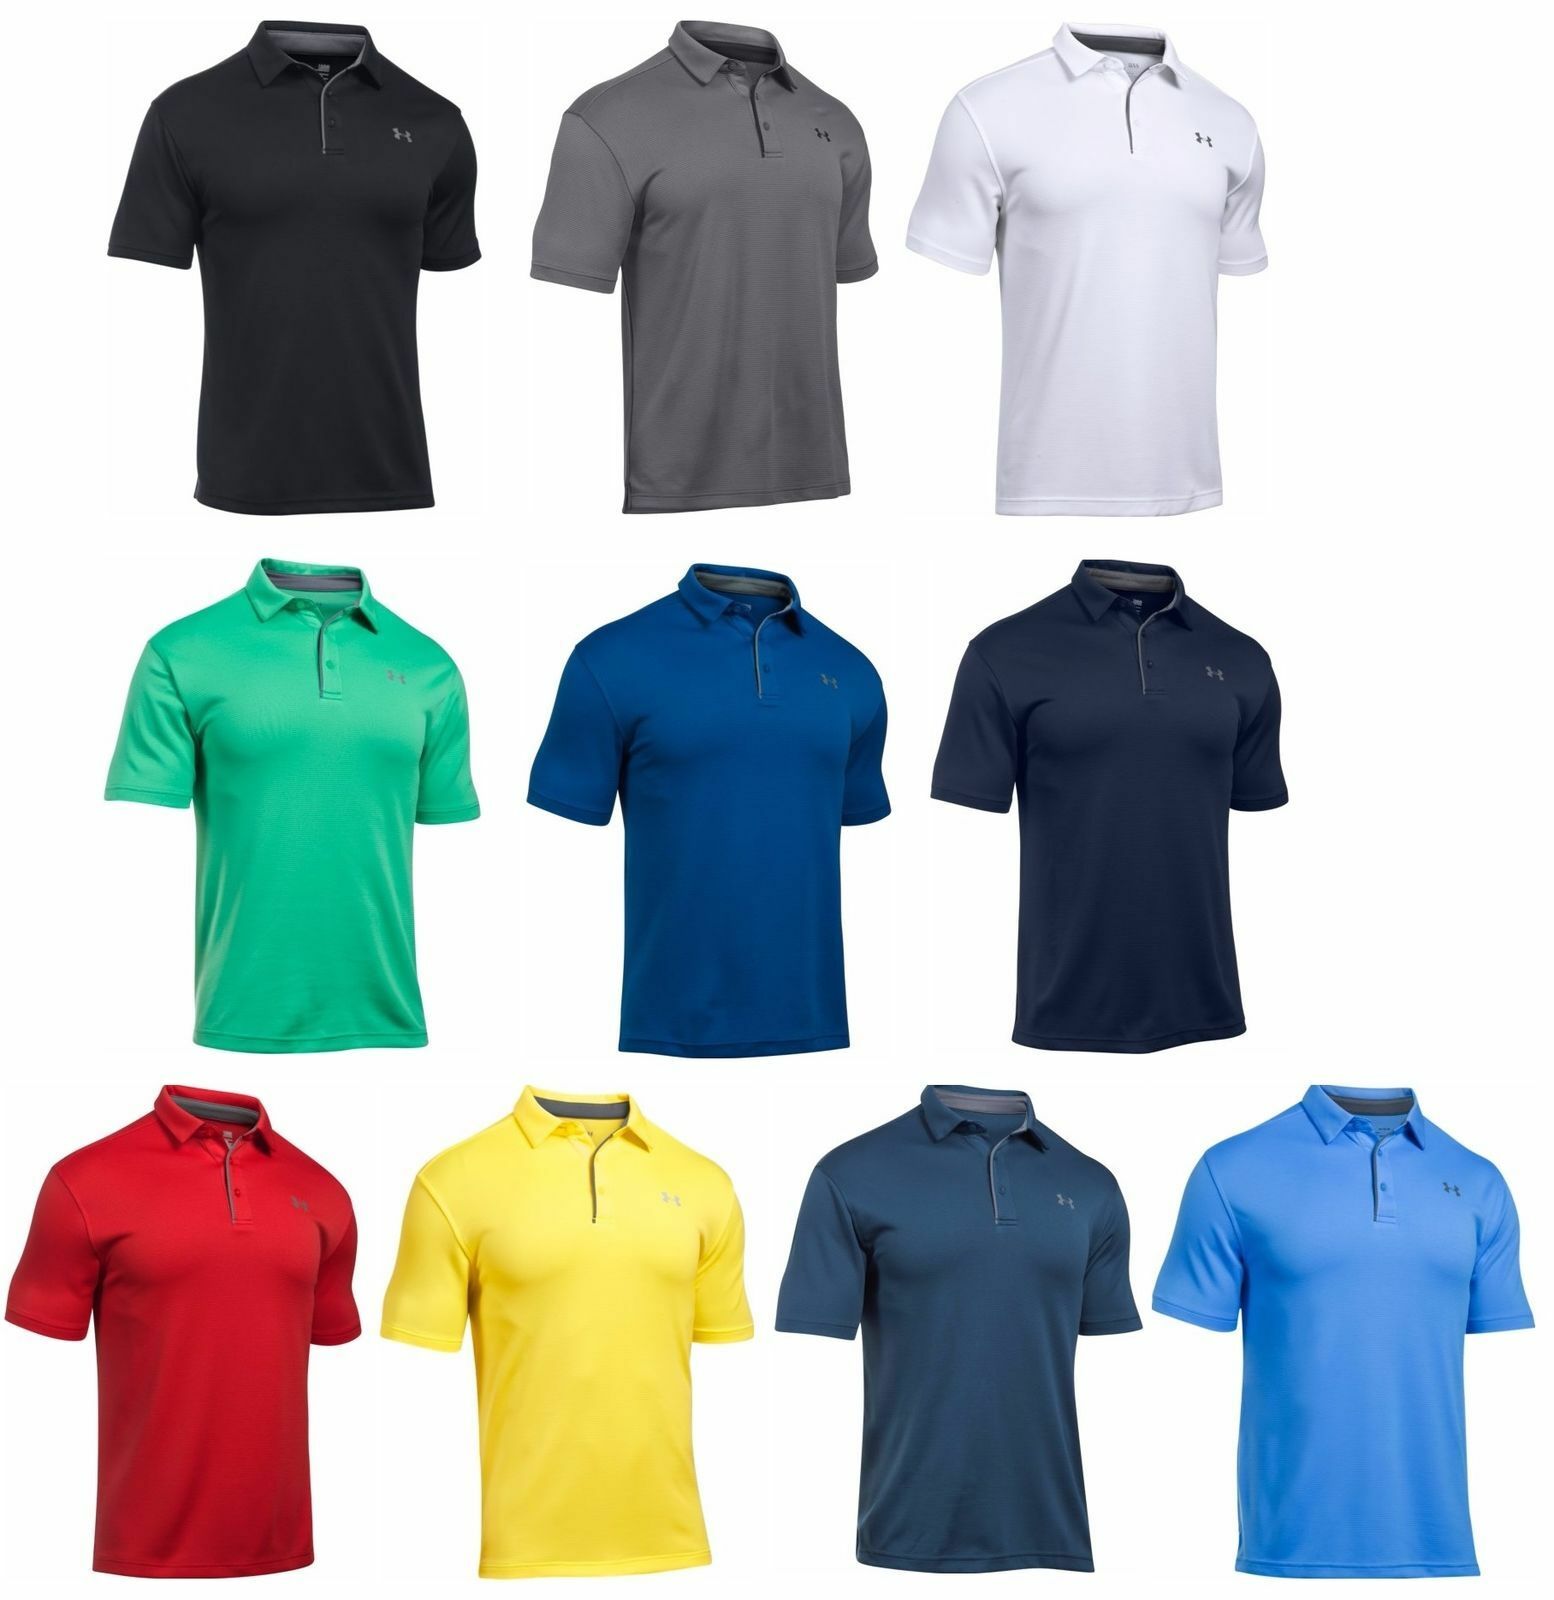 Under Armour Ua Tech Polo Mens Golf Shirt 1290140 - Choose Color & Size